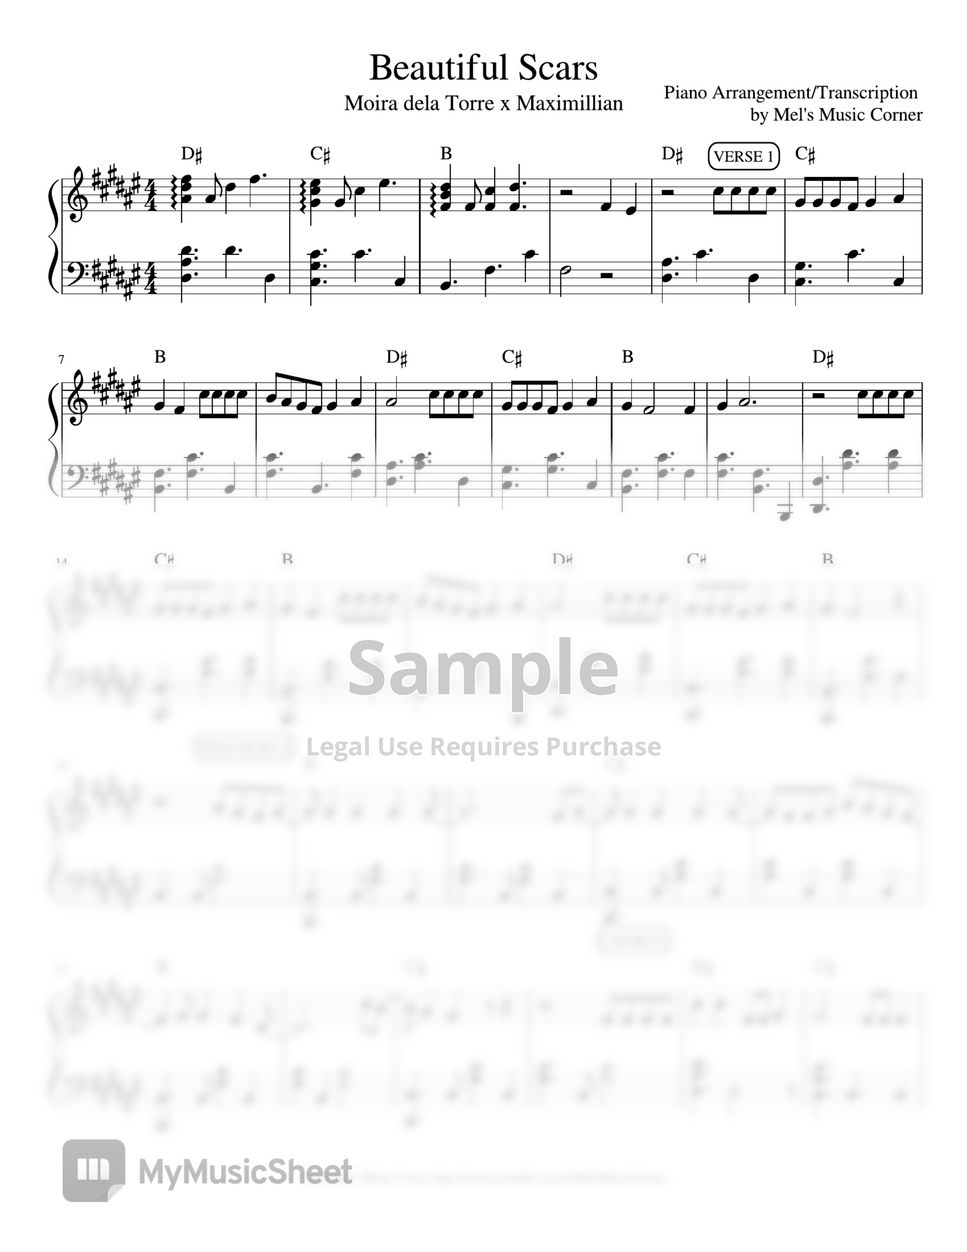 Maximillian - Beautiful Scars (piano sheet music) by Mel's Music Corner